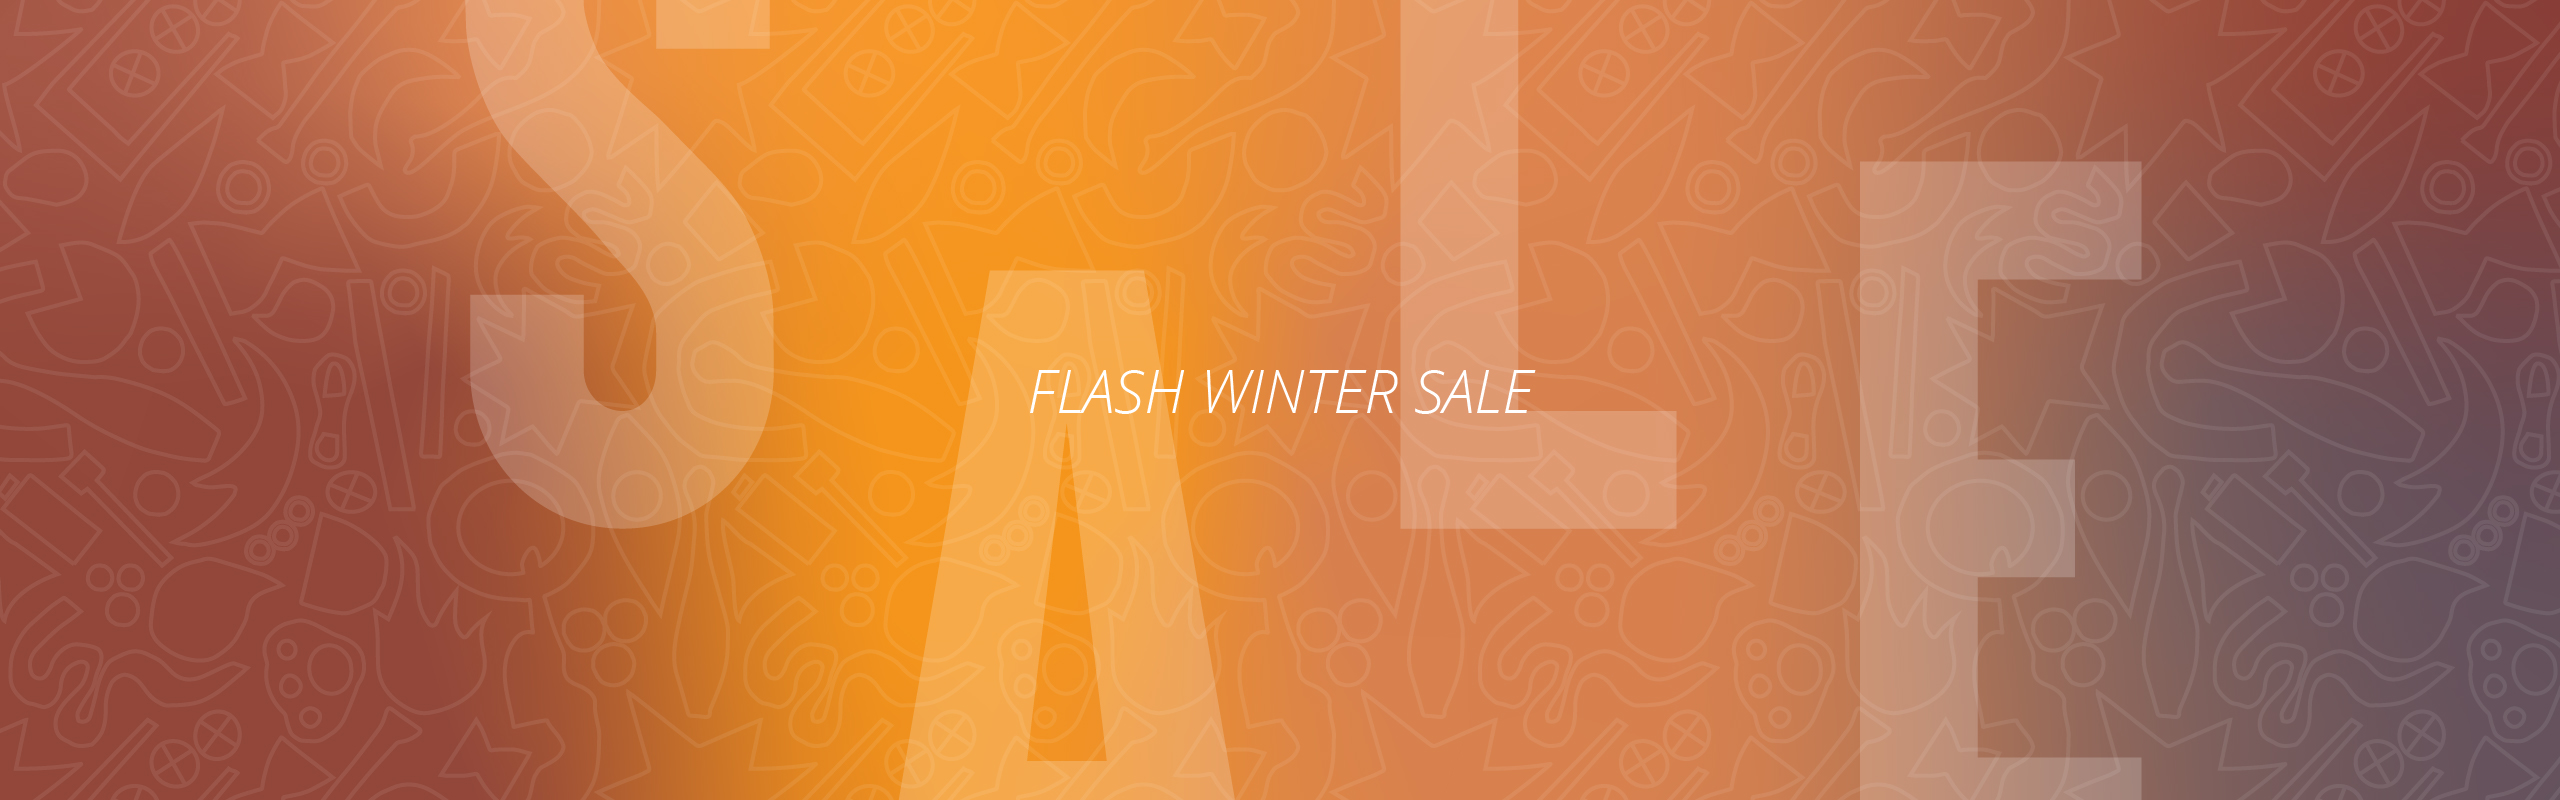 Flash Winter Sale